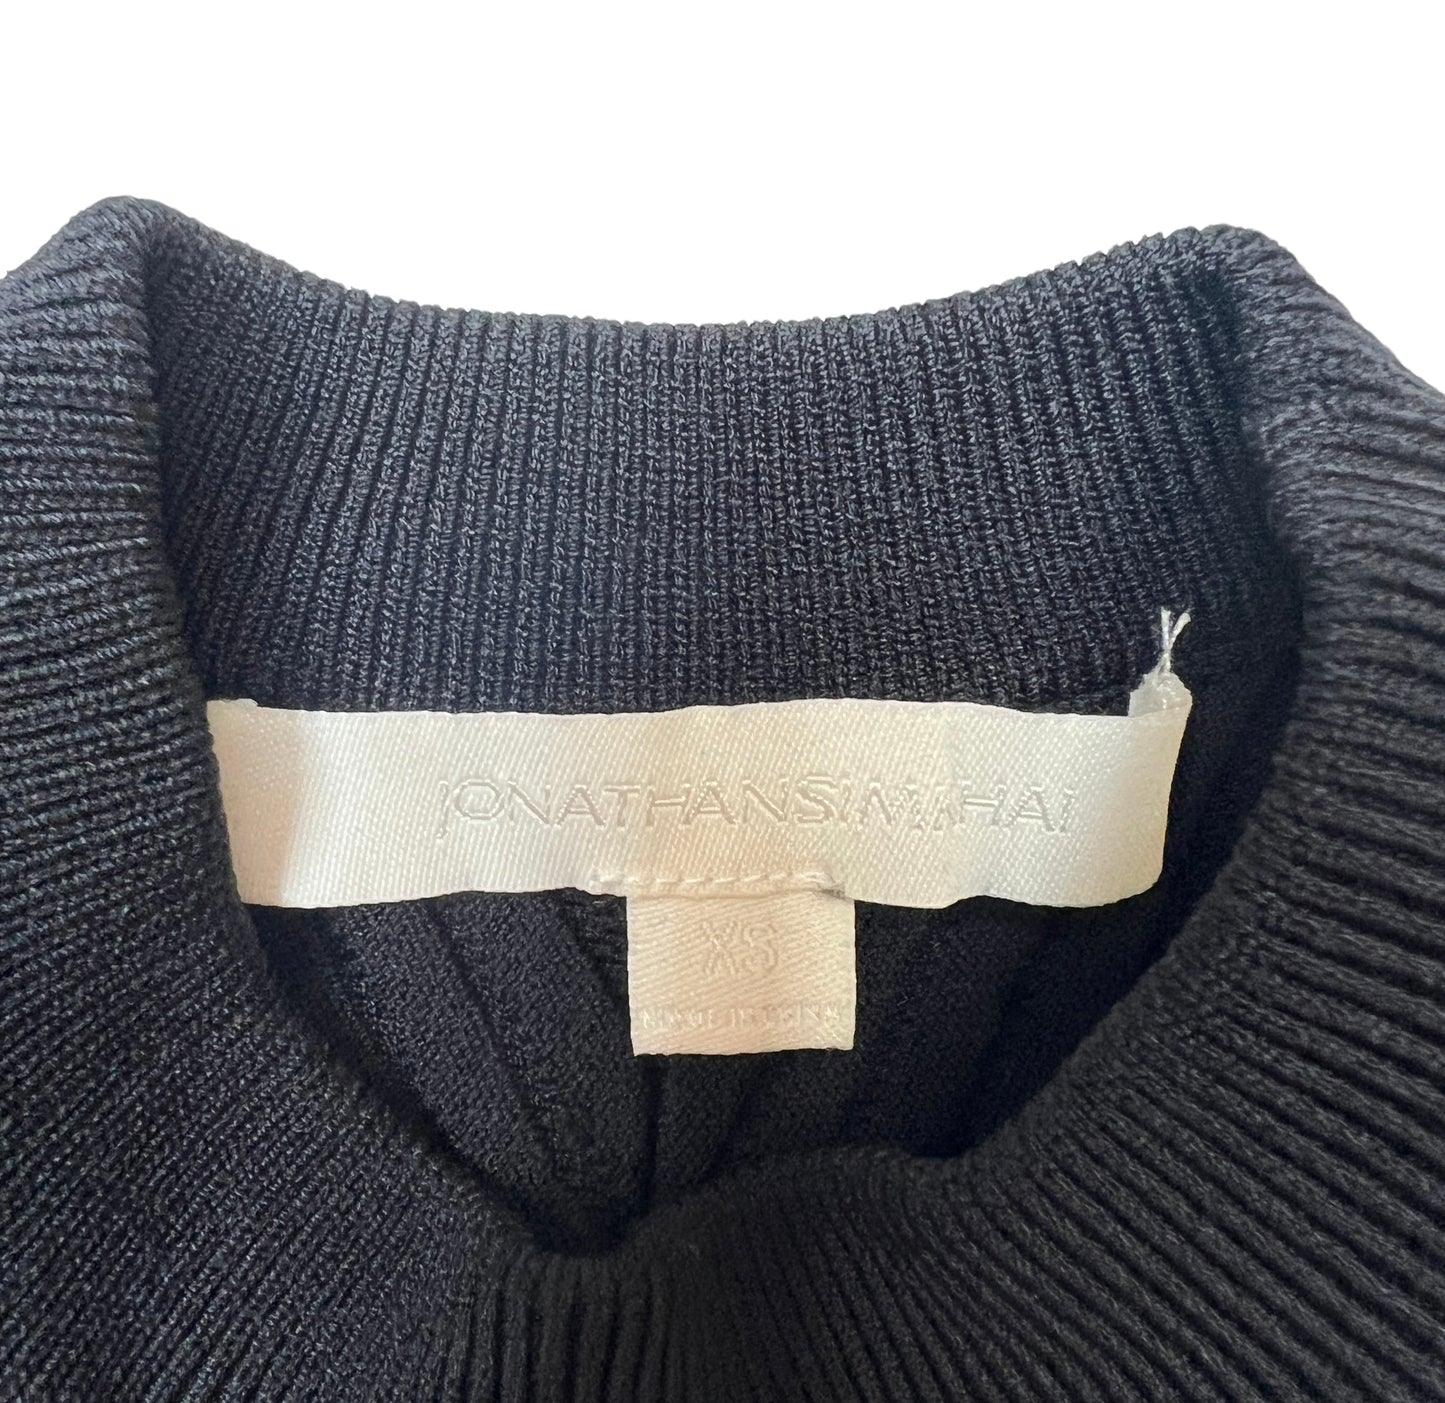 Black Cropped Top & Skirt Set - XS/S